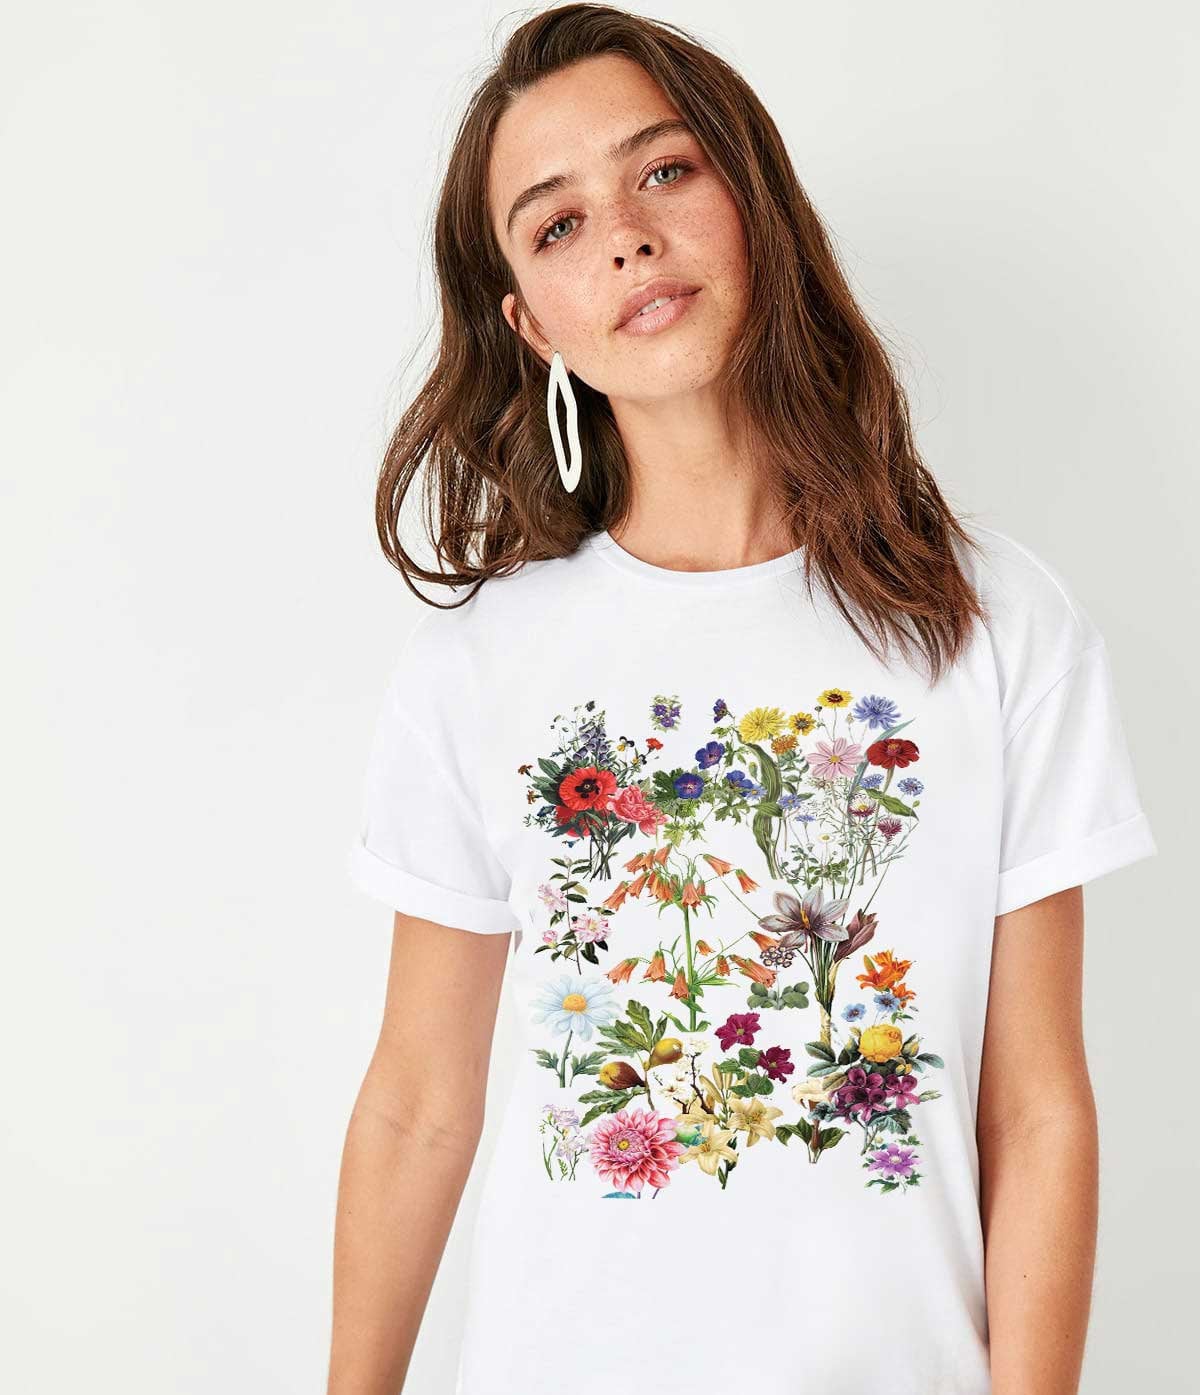 Botanical T Shirt Wildflowers Shirt Simple Shirt Nature Shirt Plant Shirt Flower Shirt I Love You Shirt Flowers Shirt Minimalist Shirt